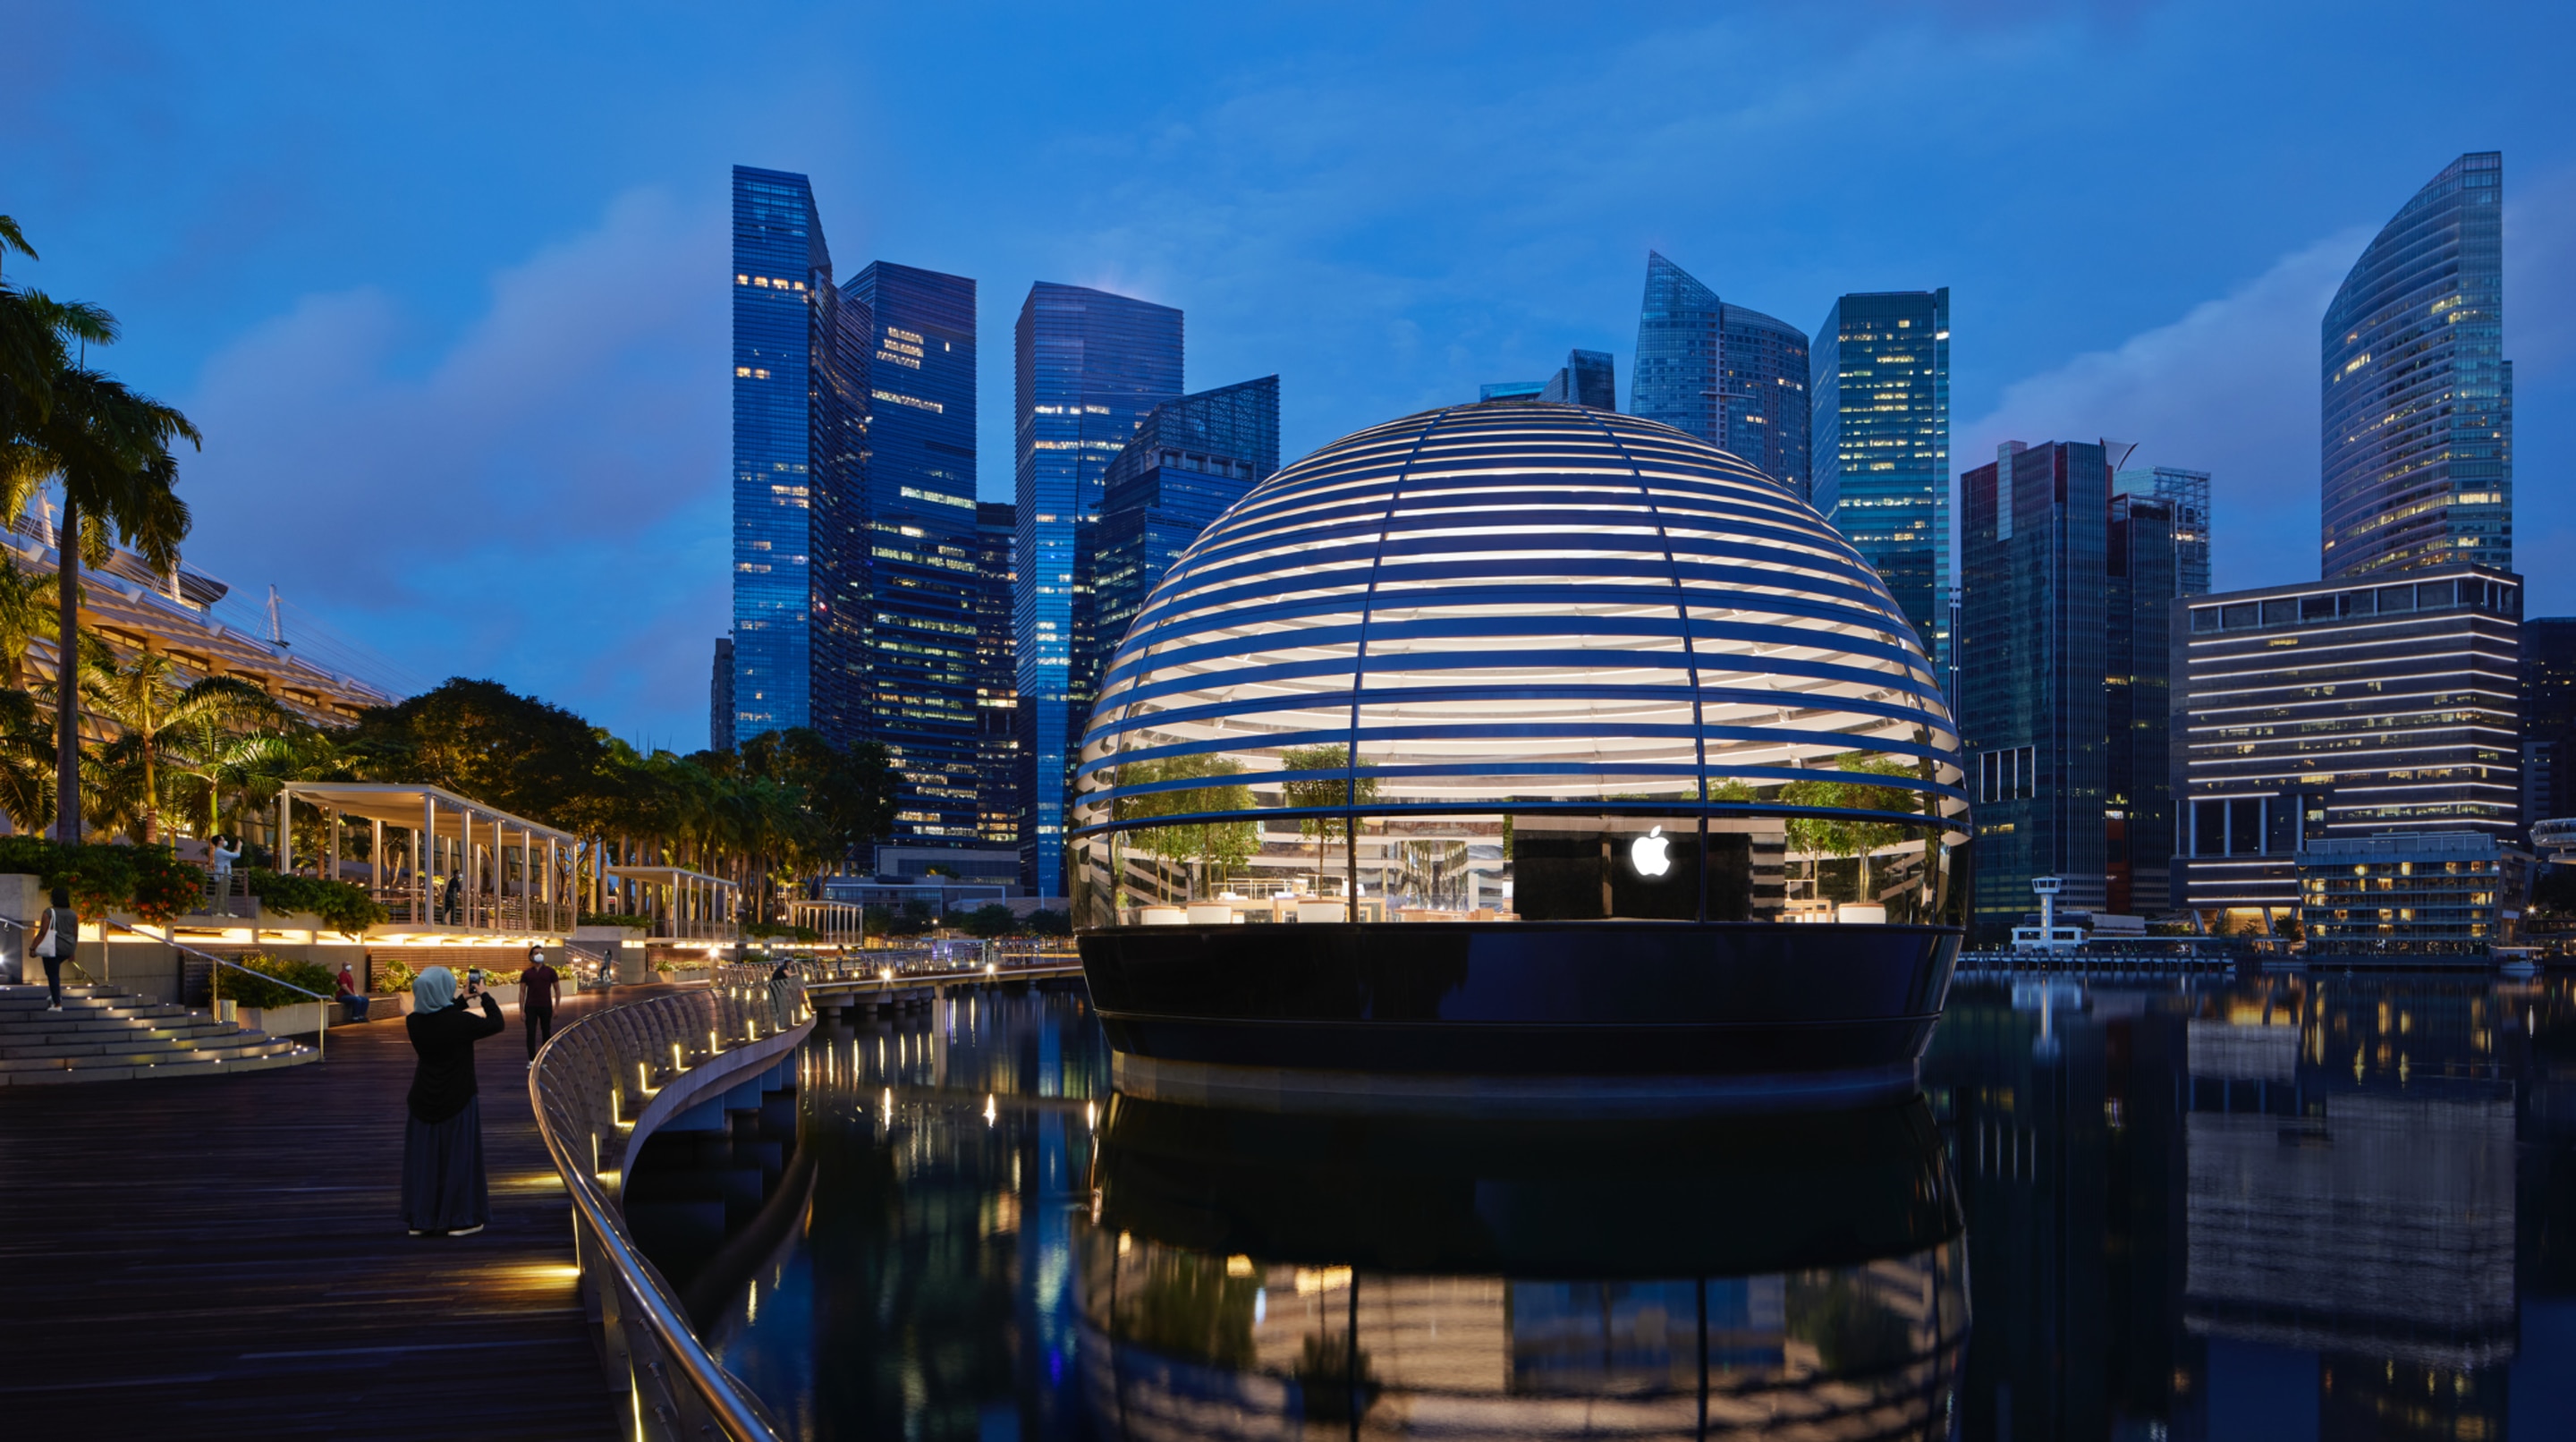 Apple Marina Bay Sands in Singapore